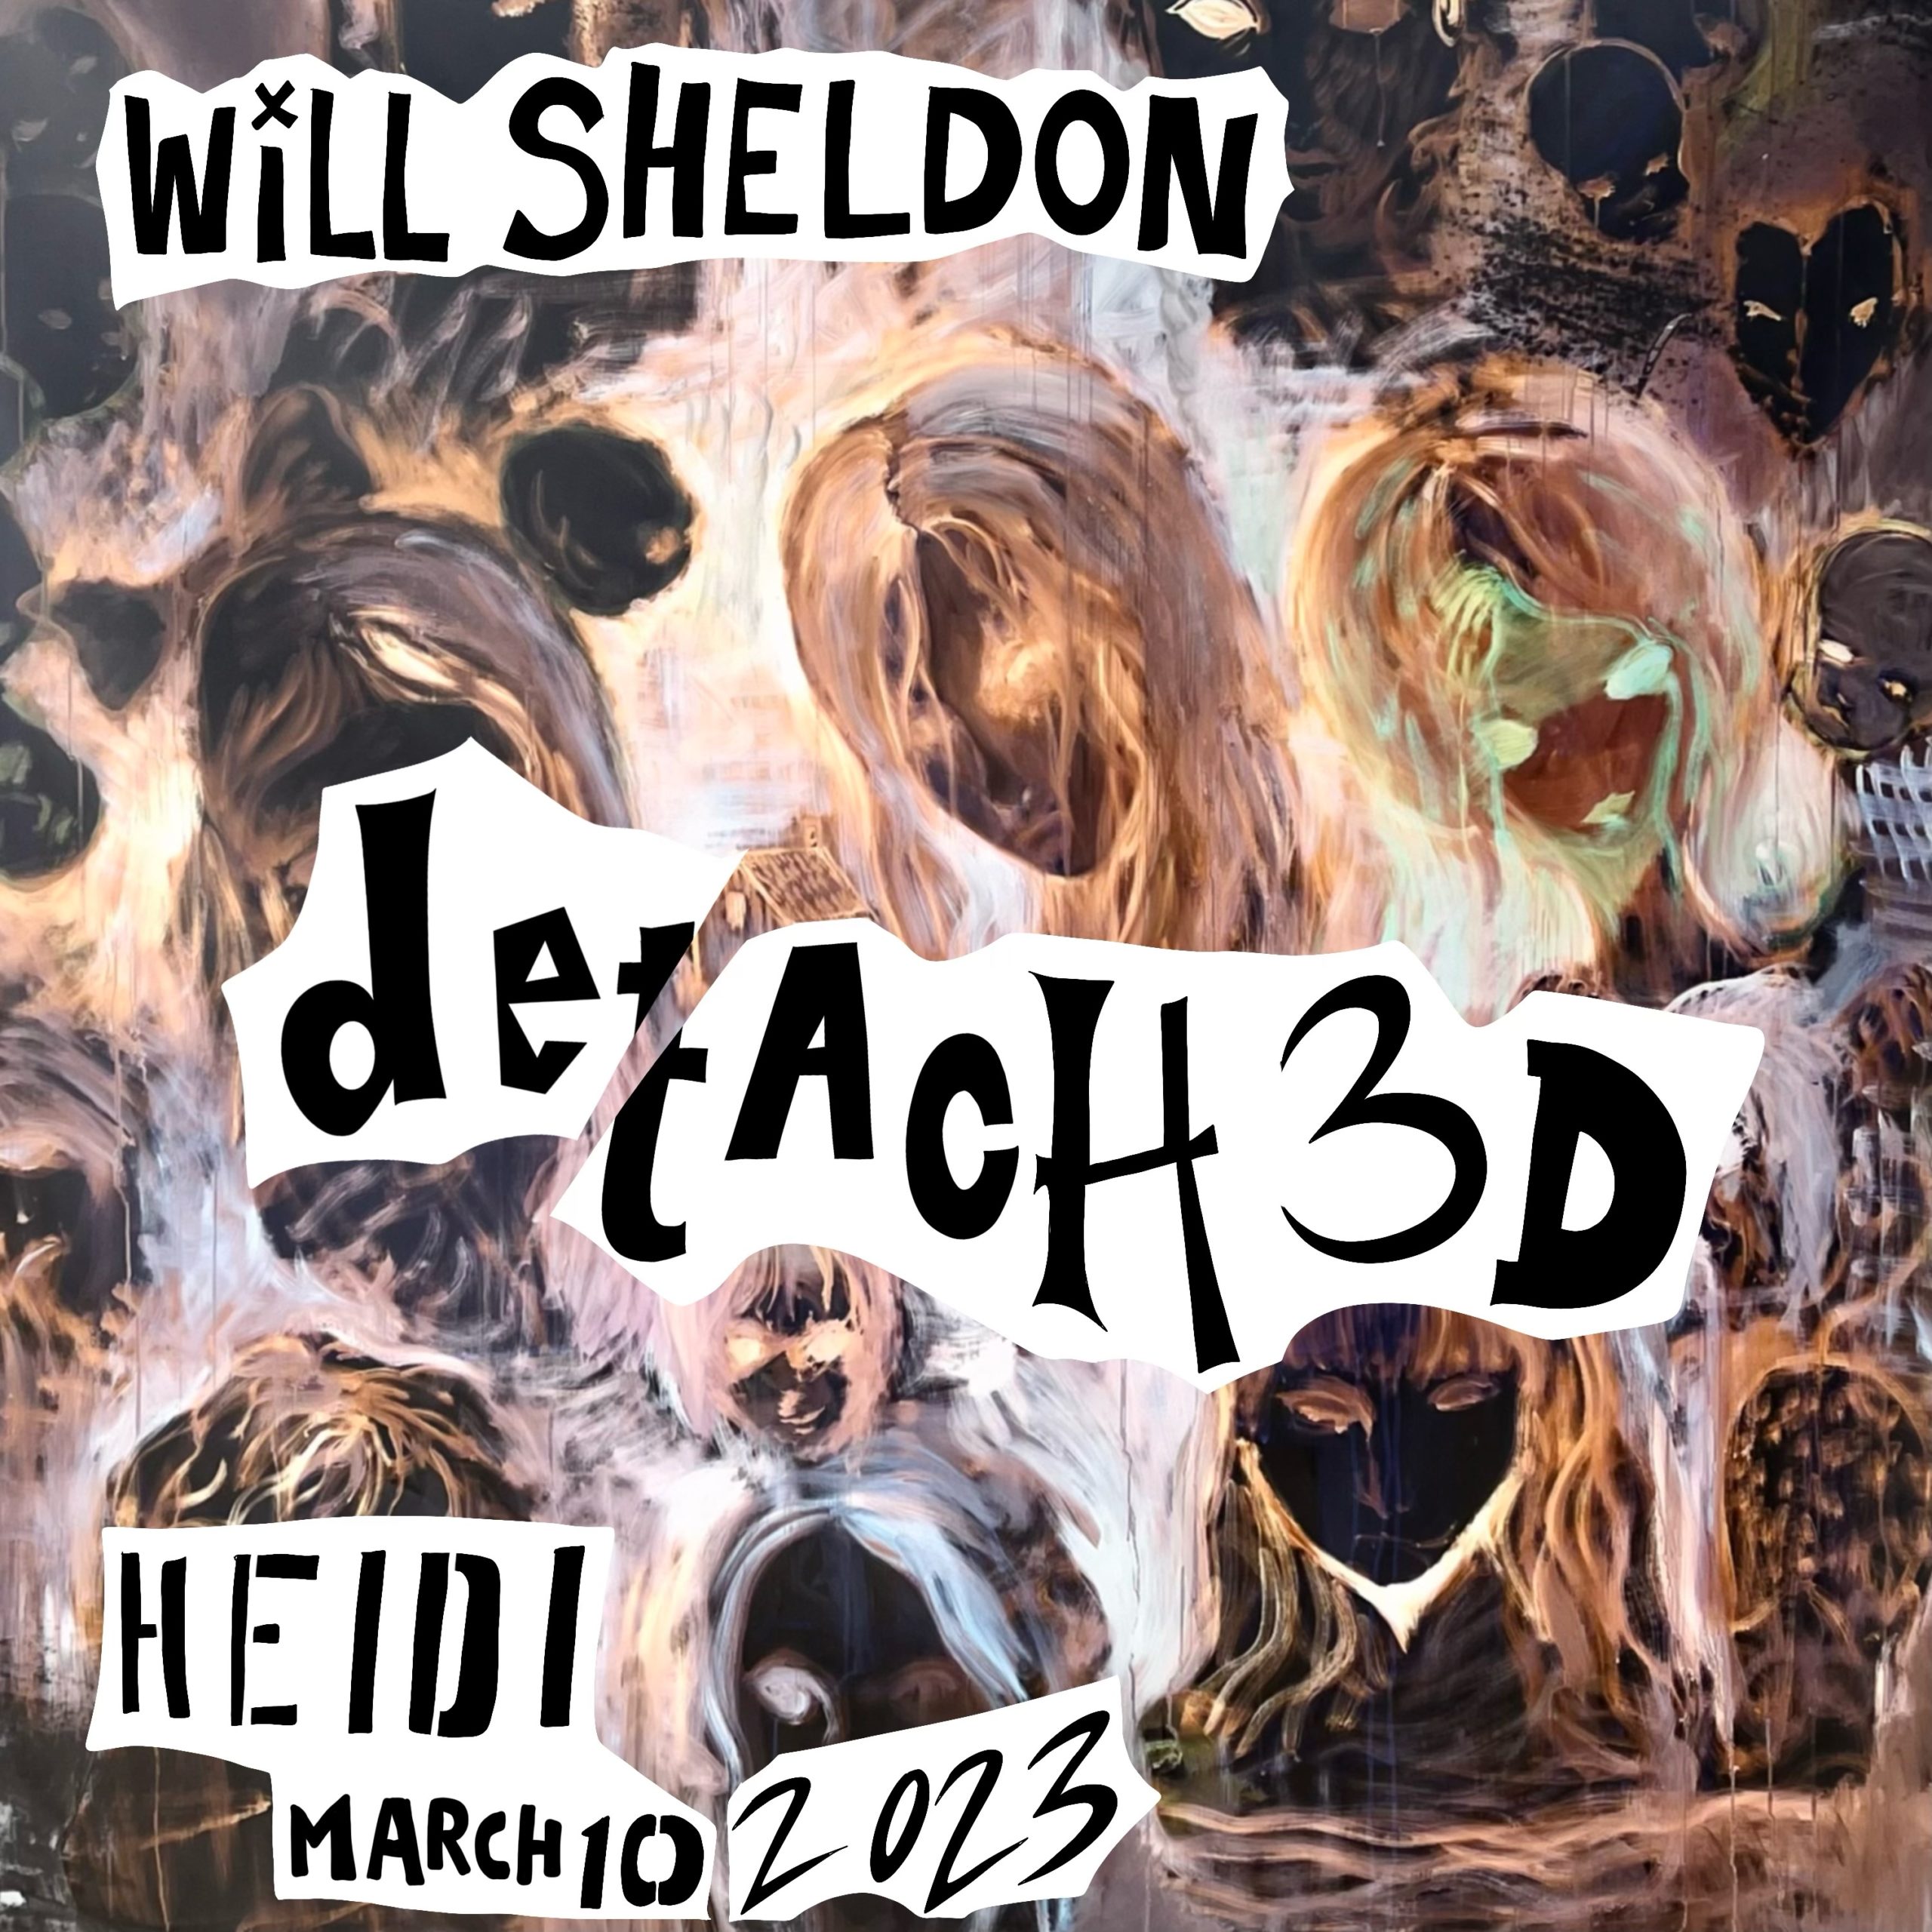 Will Sheldon, Detached, Heidi, 2023